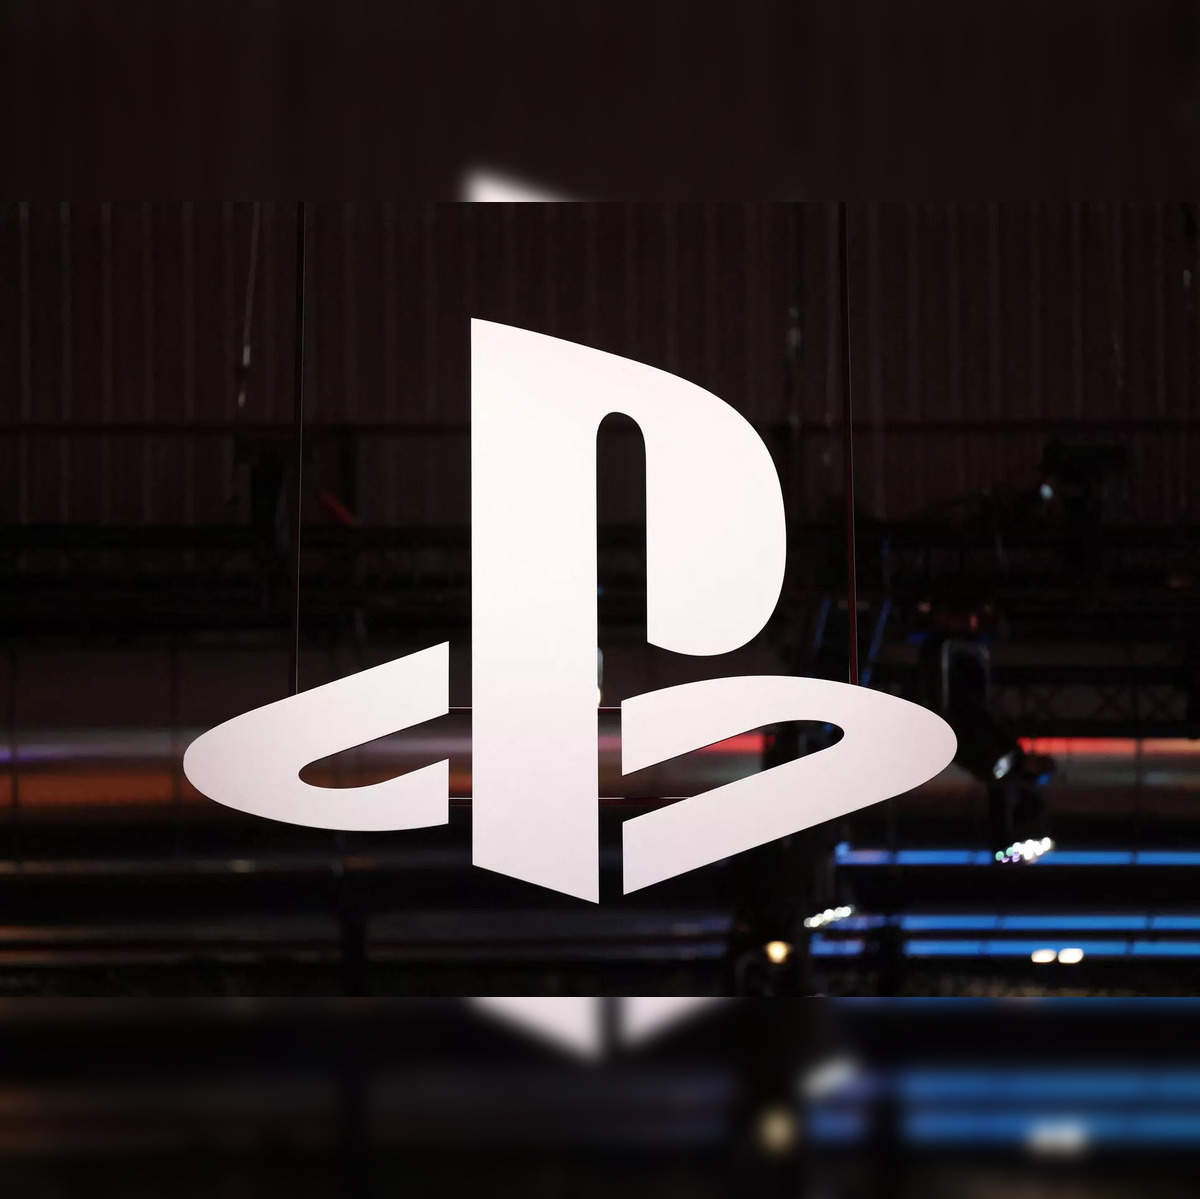 PlayStation Plus Price Rises Internationally